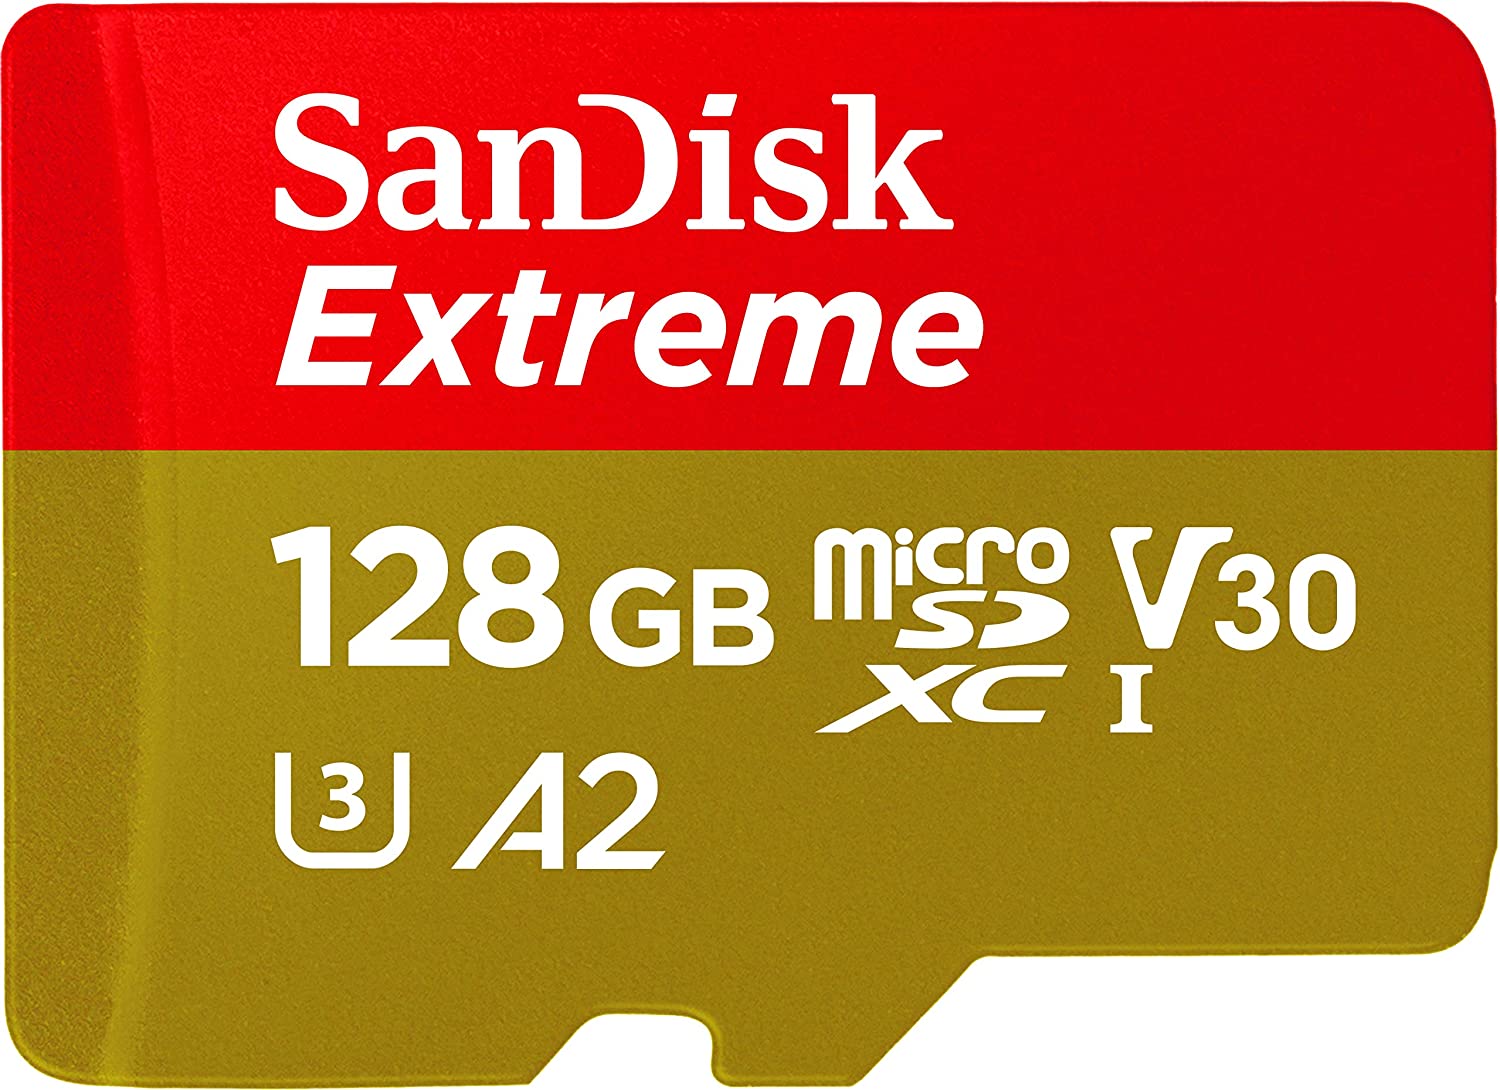 SanDisk 128 GB Extreme microSD Card